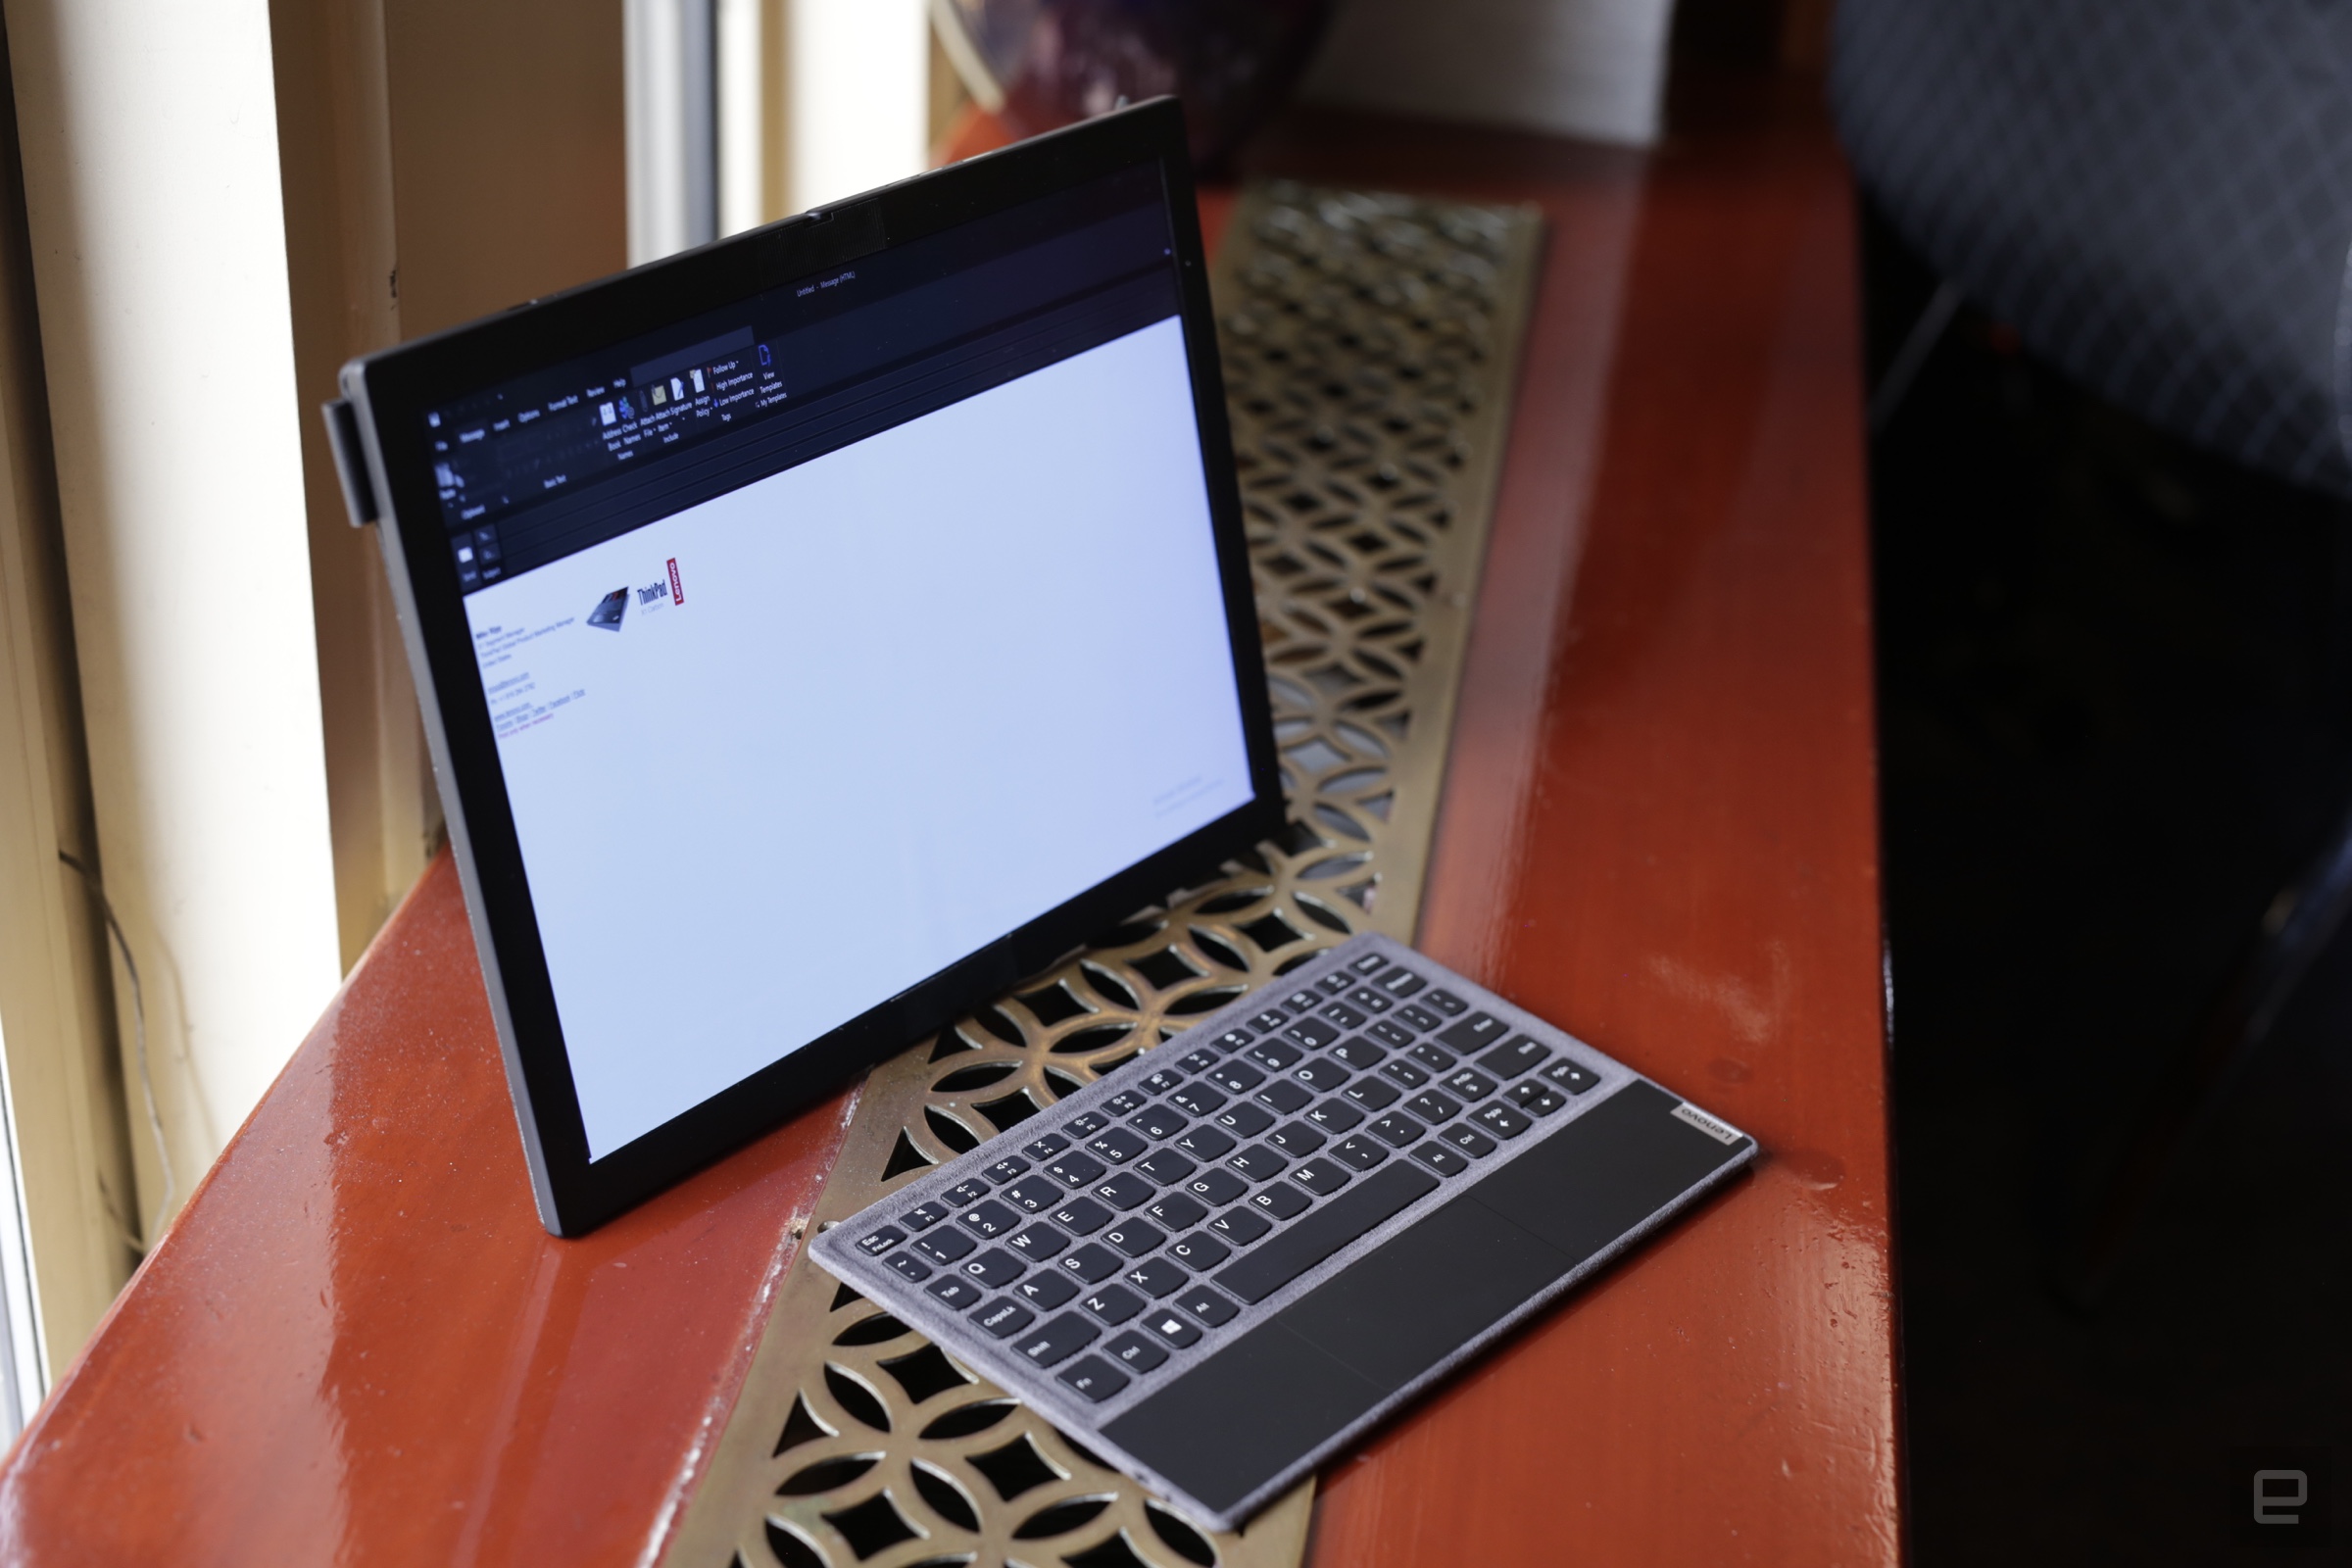 Lenovo ThinkPad X1 foldable concept PC

Chris Velazco / Engadget